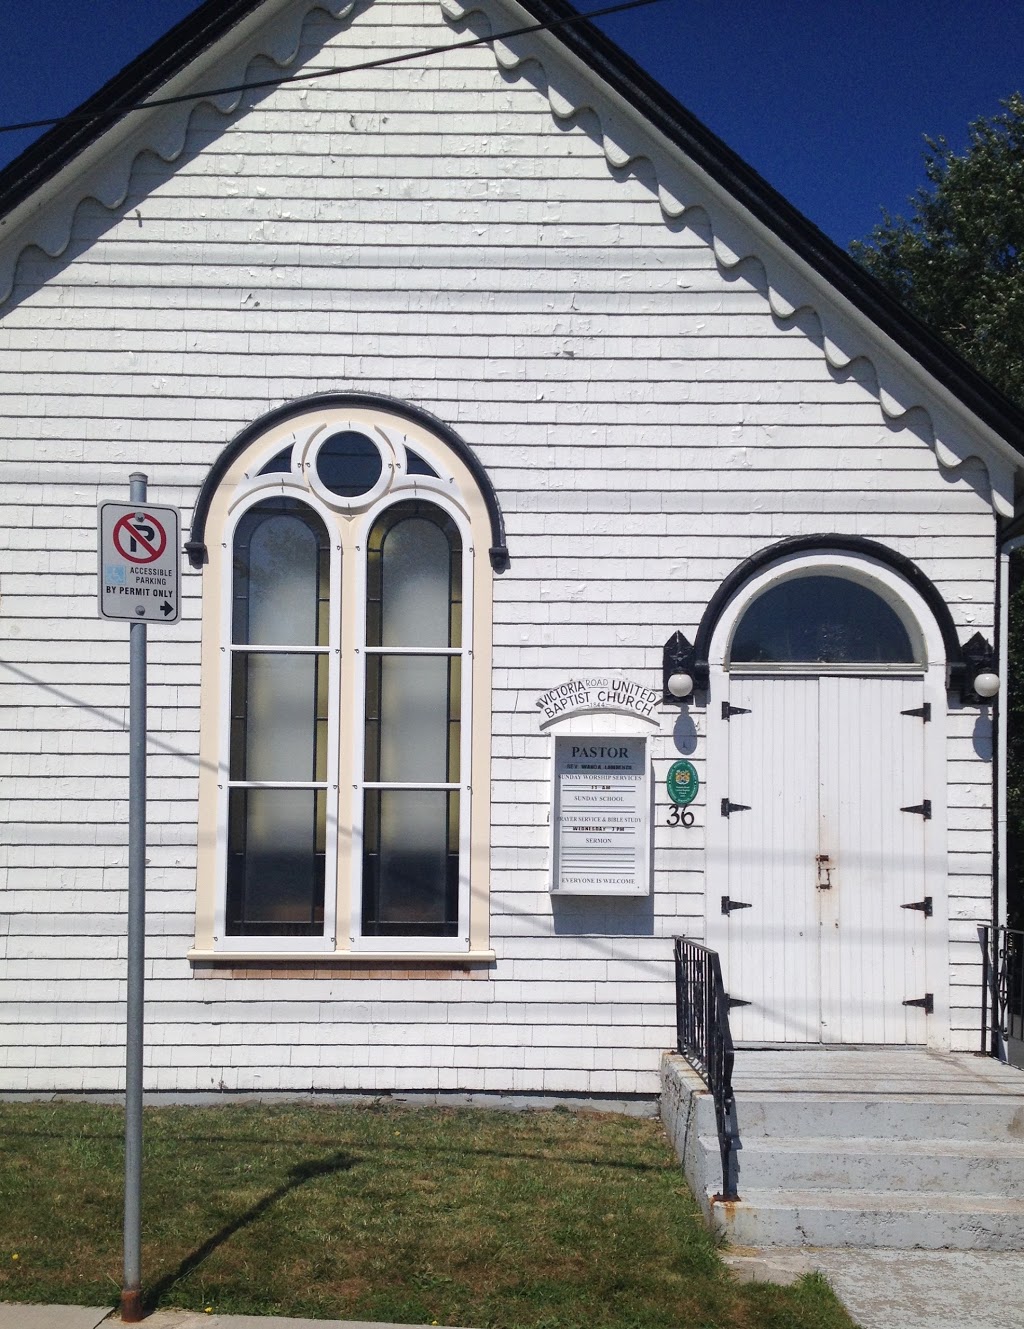 Victoria Road United Baptist Church | 36 NS-322, Dartmouth, NS B2Y 2V9, Canada | Phone: (902) 469-8576